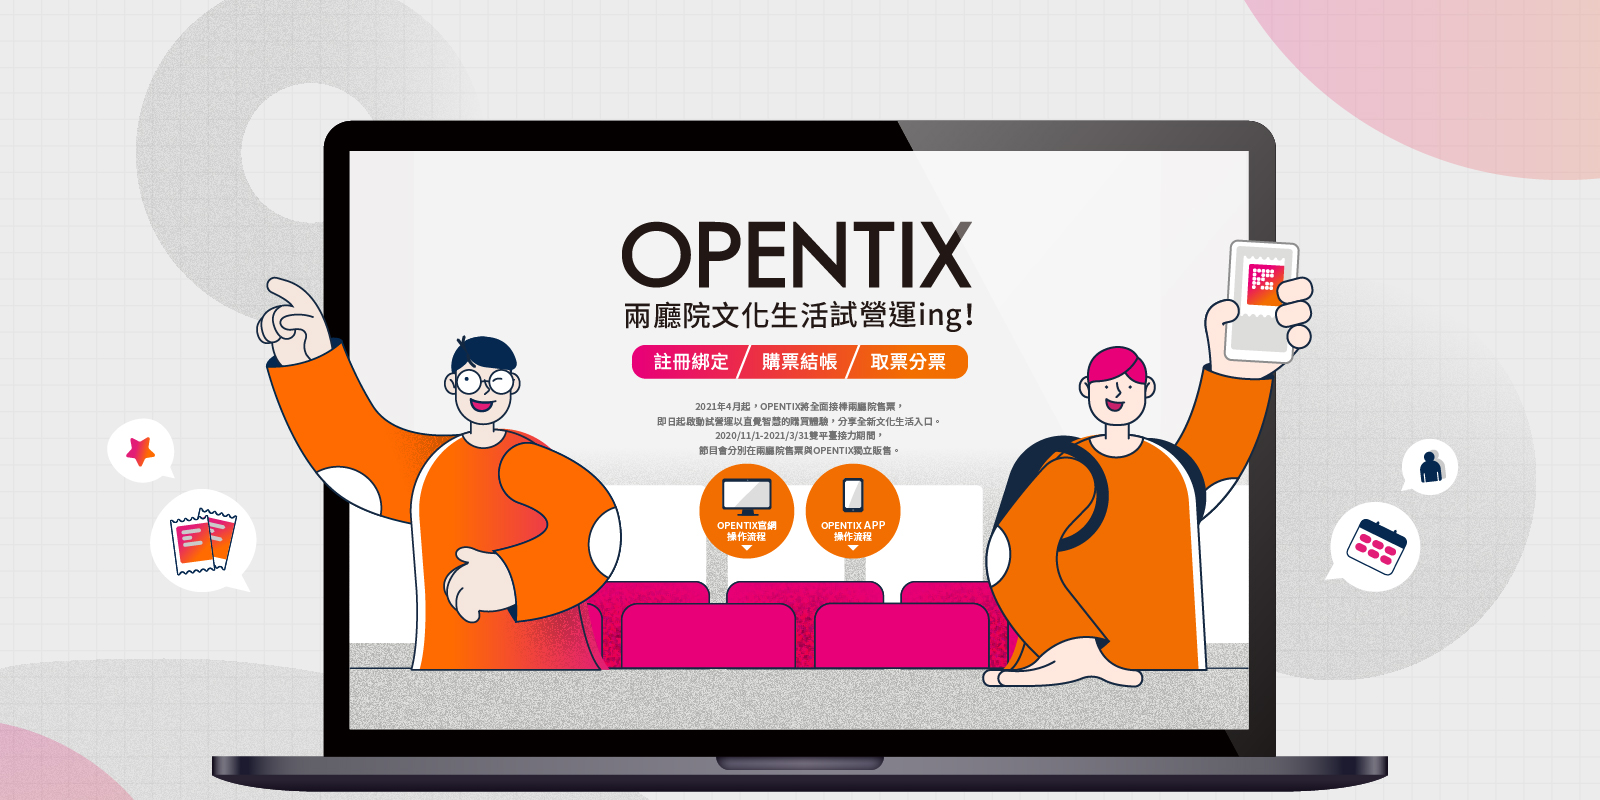 OPENTIX試營運資訊網站